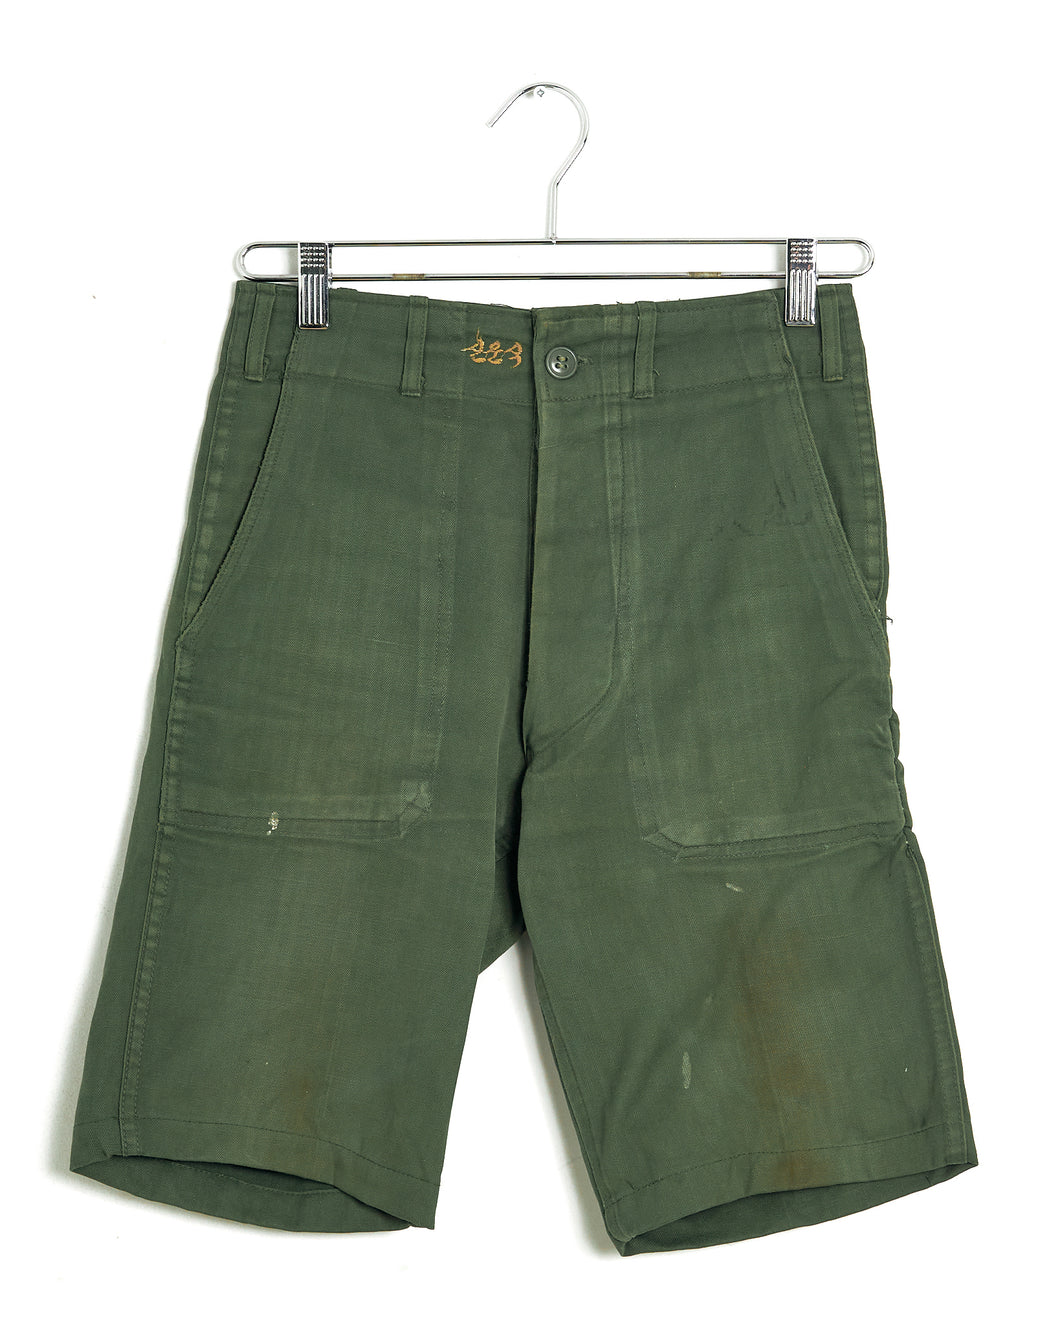 1950s/60s Korean War HBT Shorts - 27